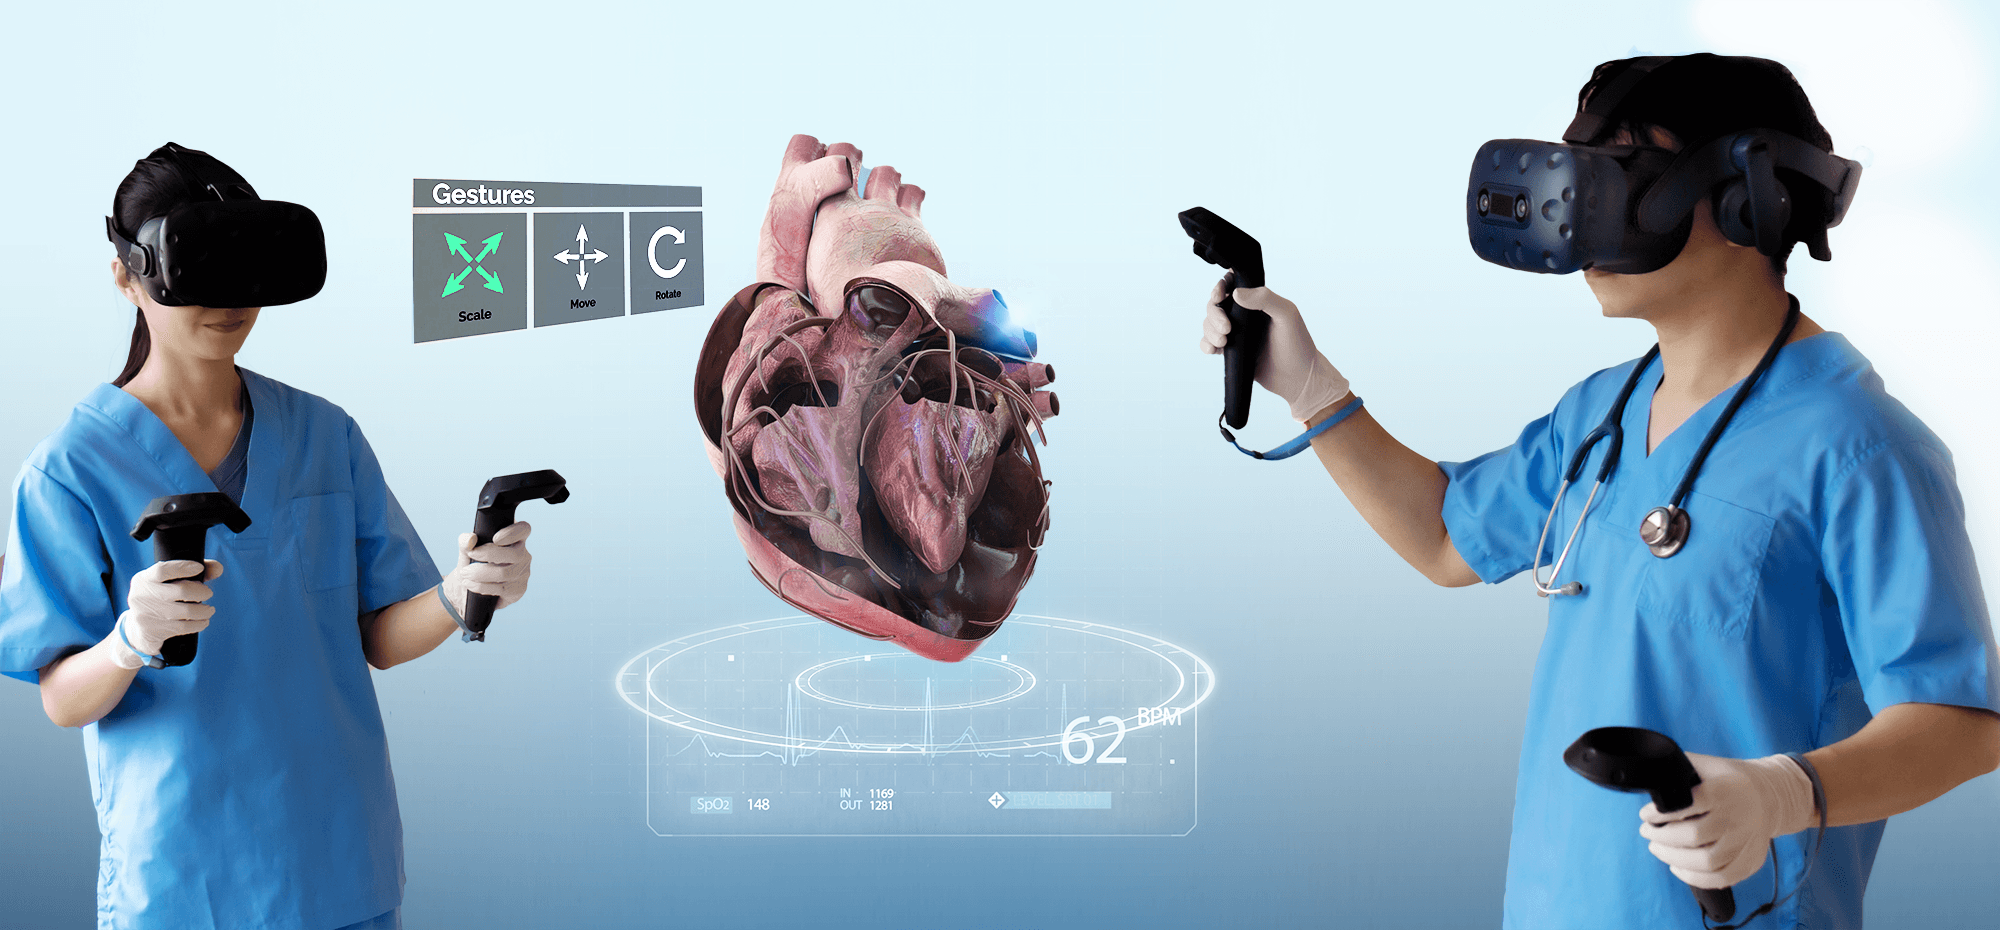 Medical education using VR